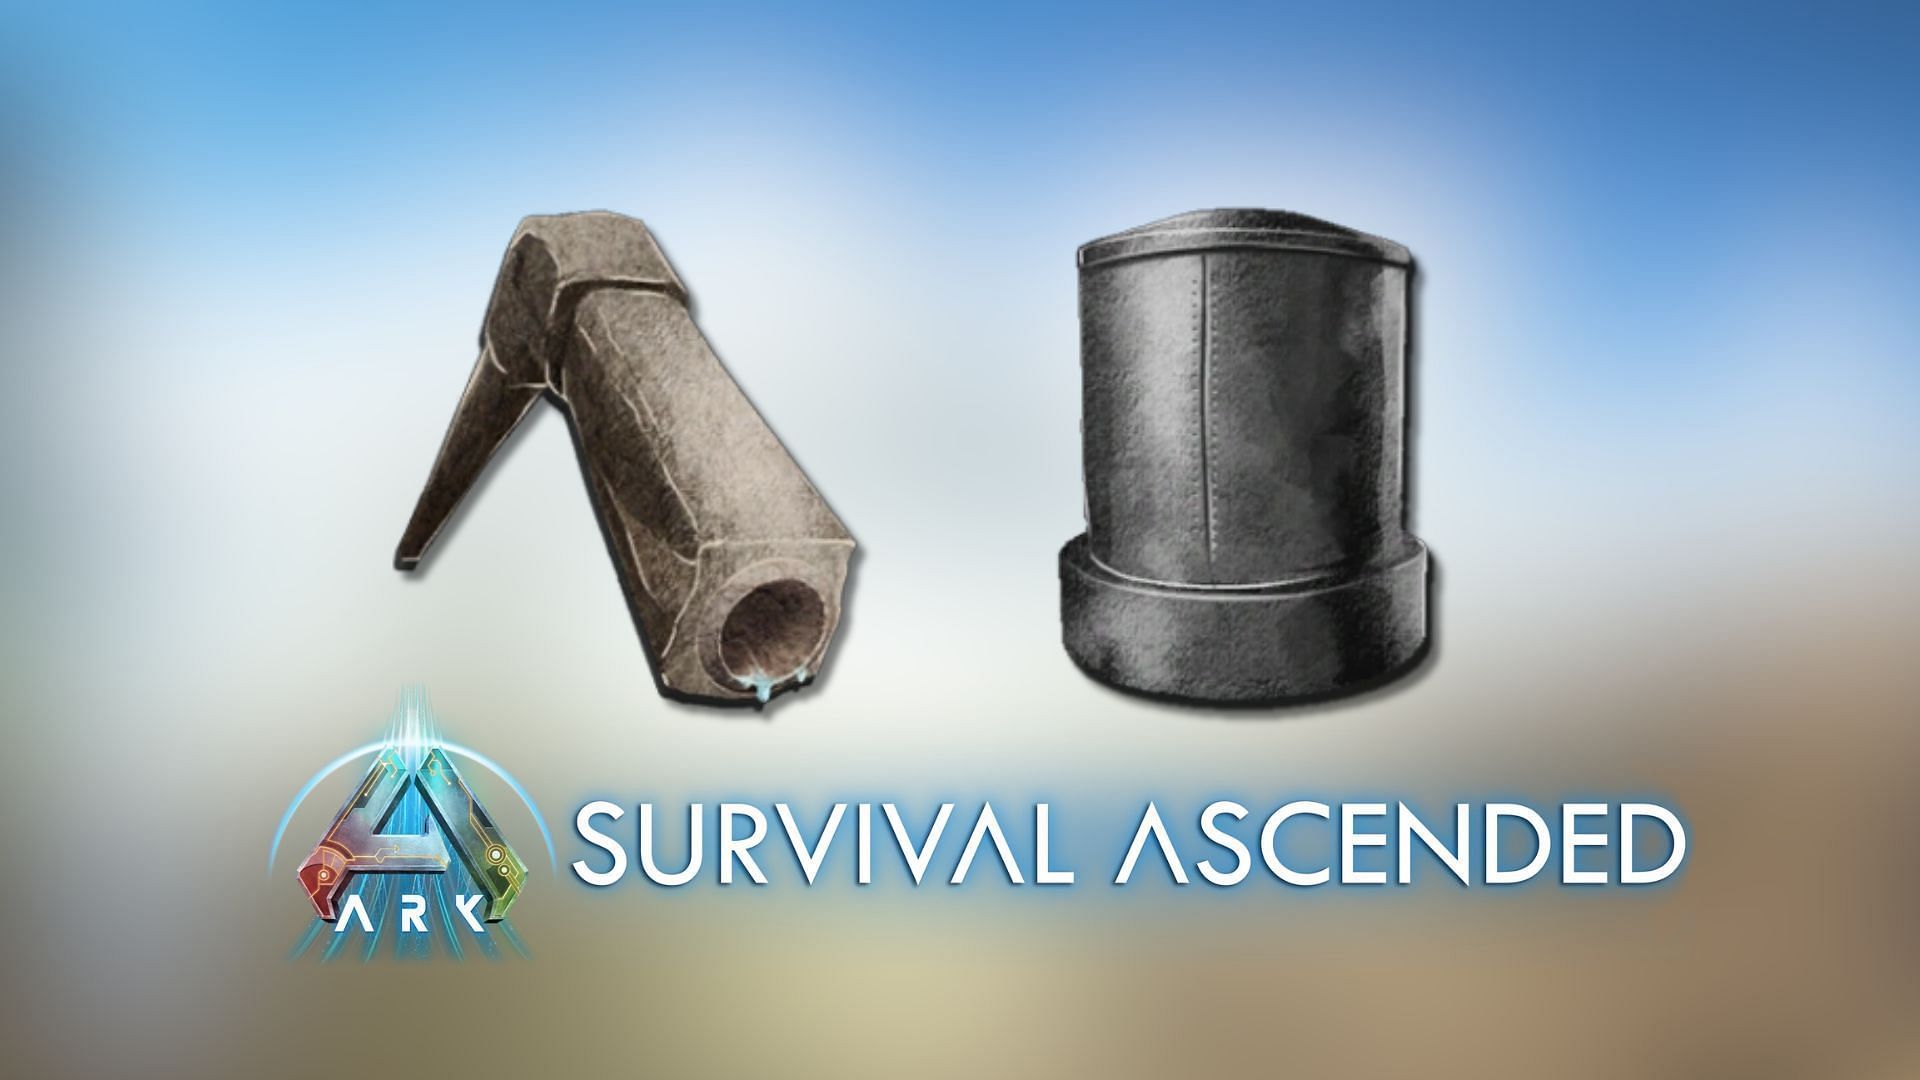 unlimited water range hack in Ark Survival Ascended